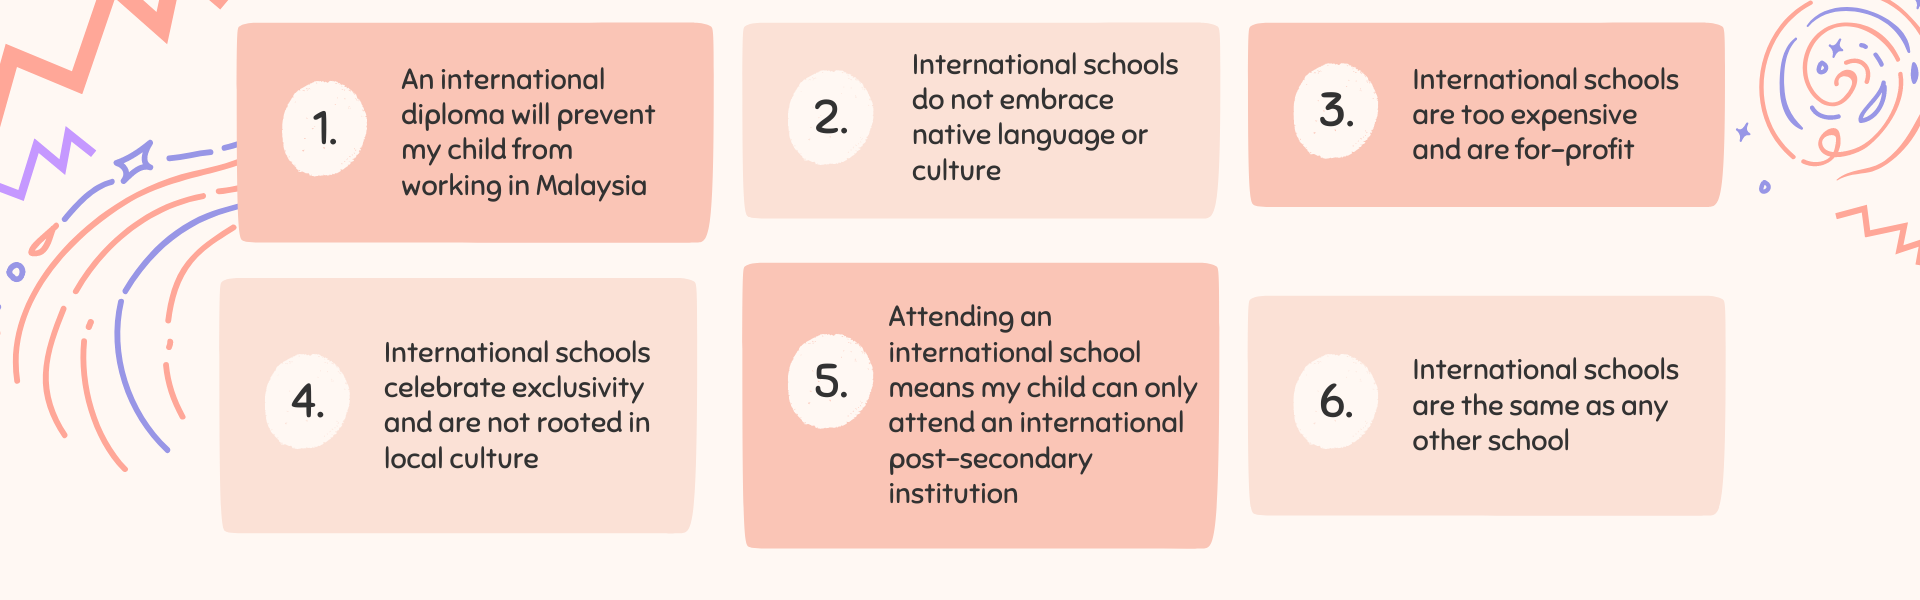 myths about international schools